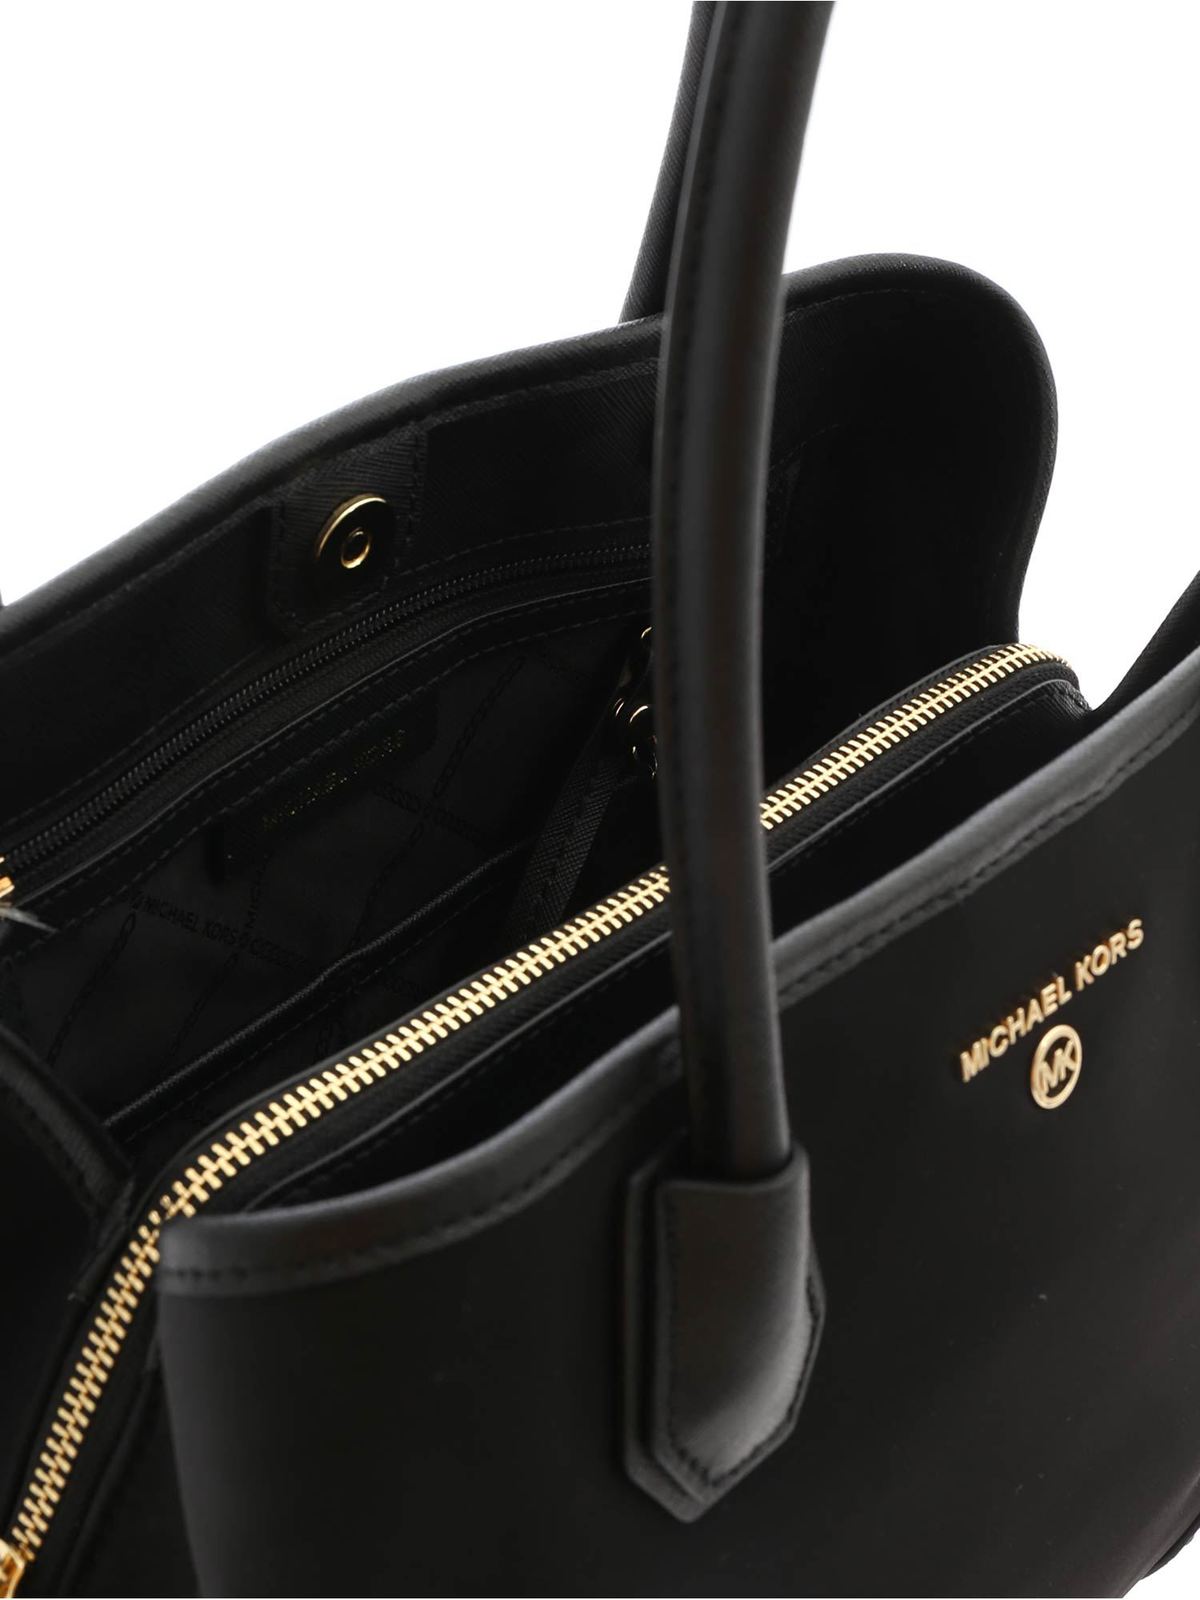 Buy Black Handbags for Women by Michael Kors Online